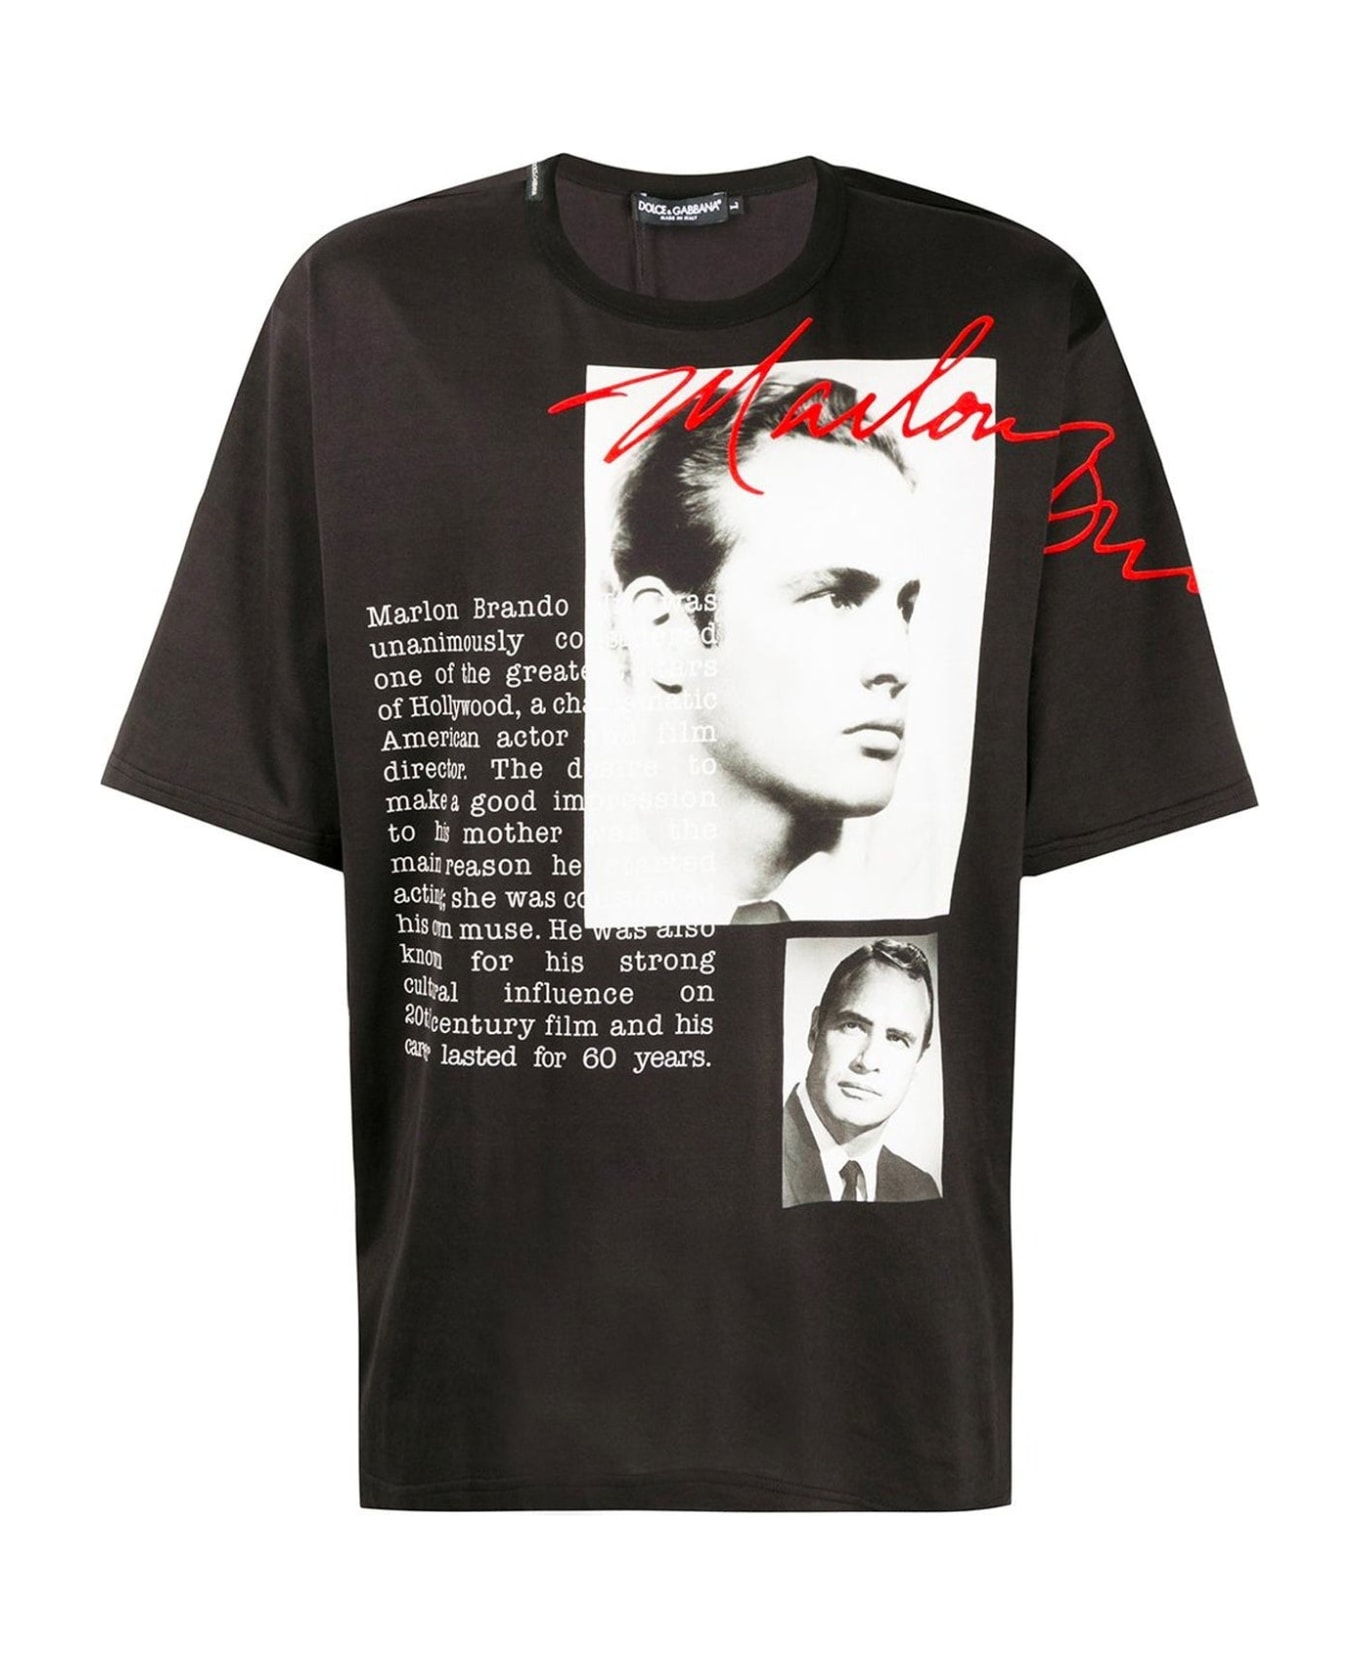 Dolce & Gabbana Cotton T-shirt - Black シャツ